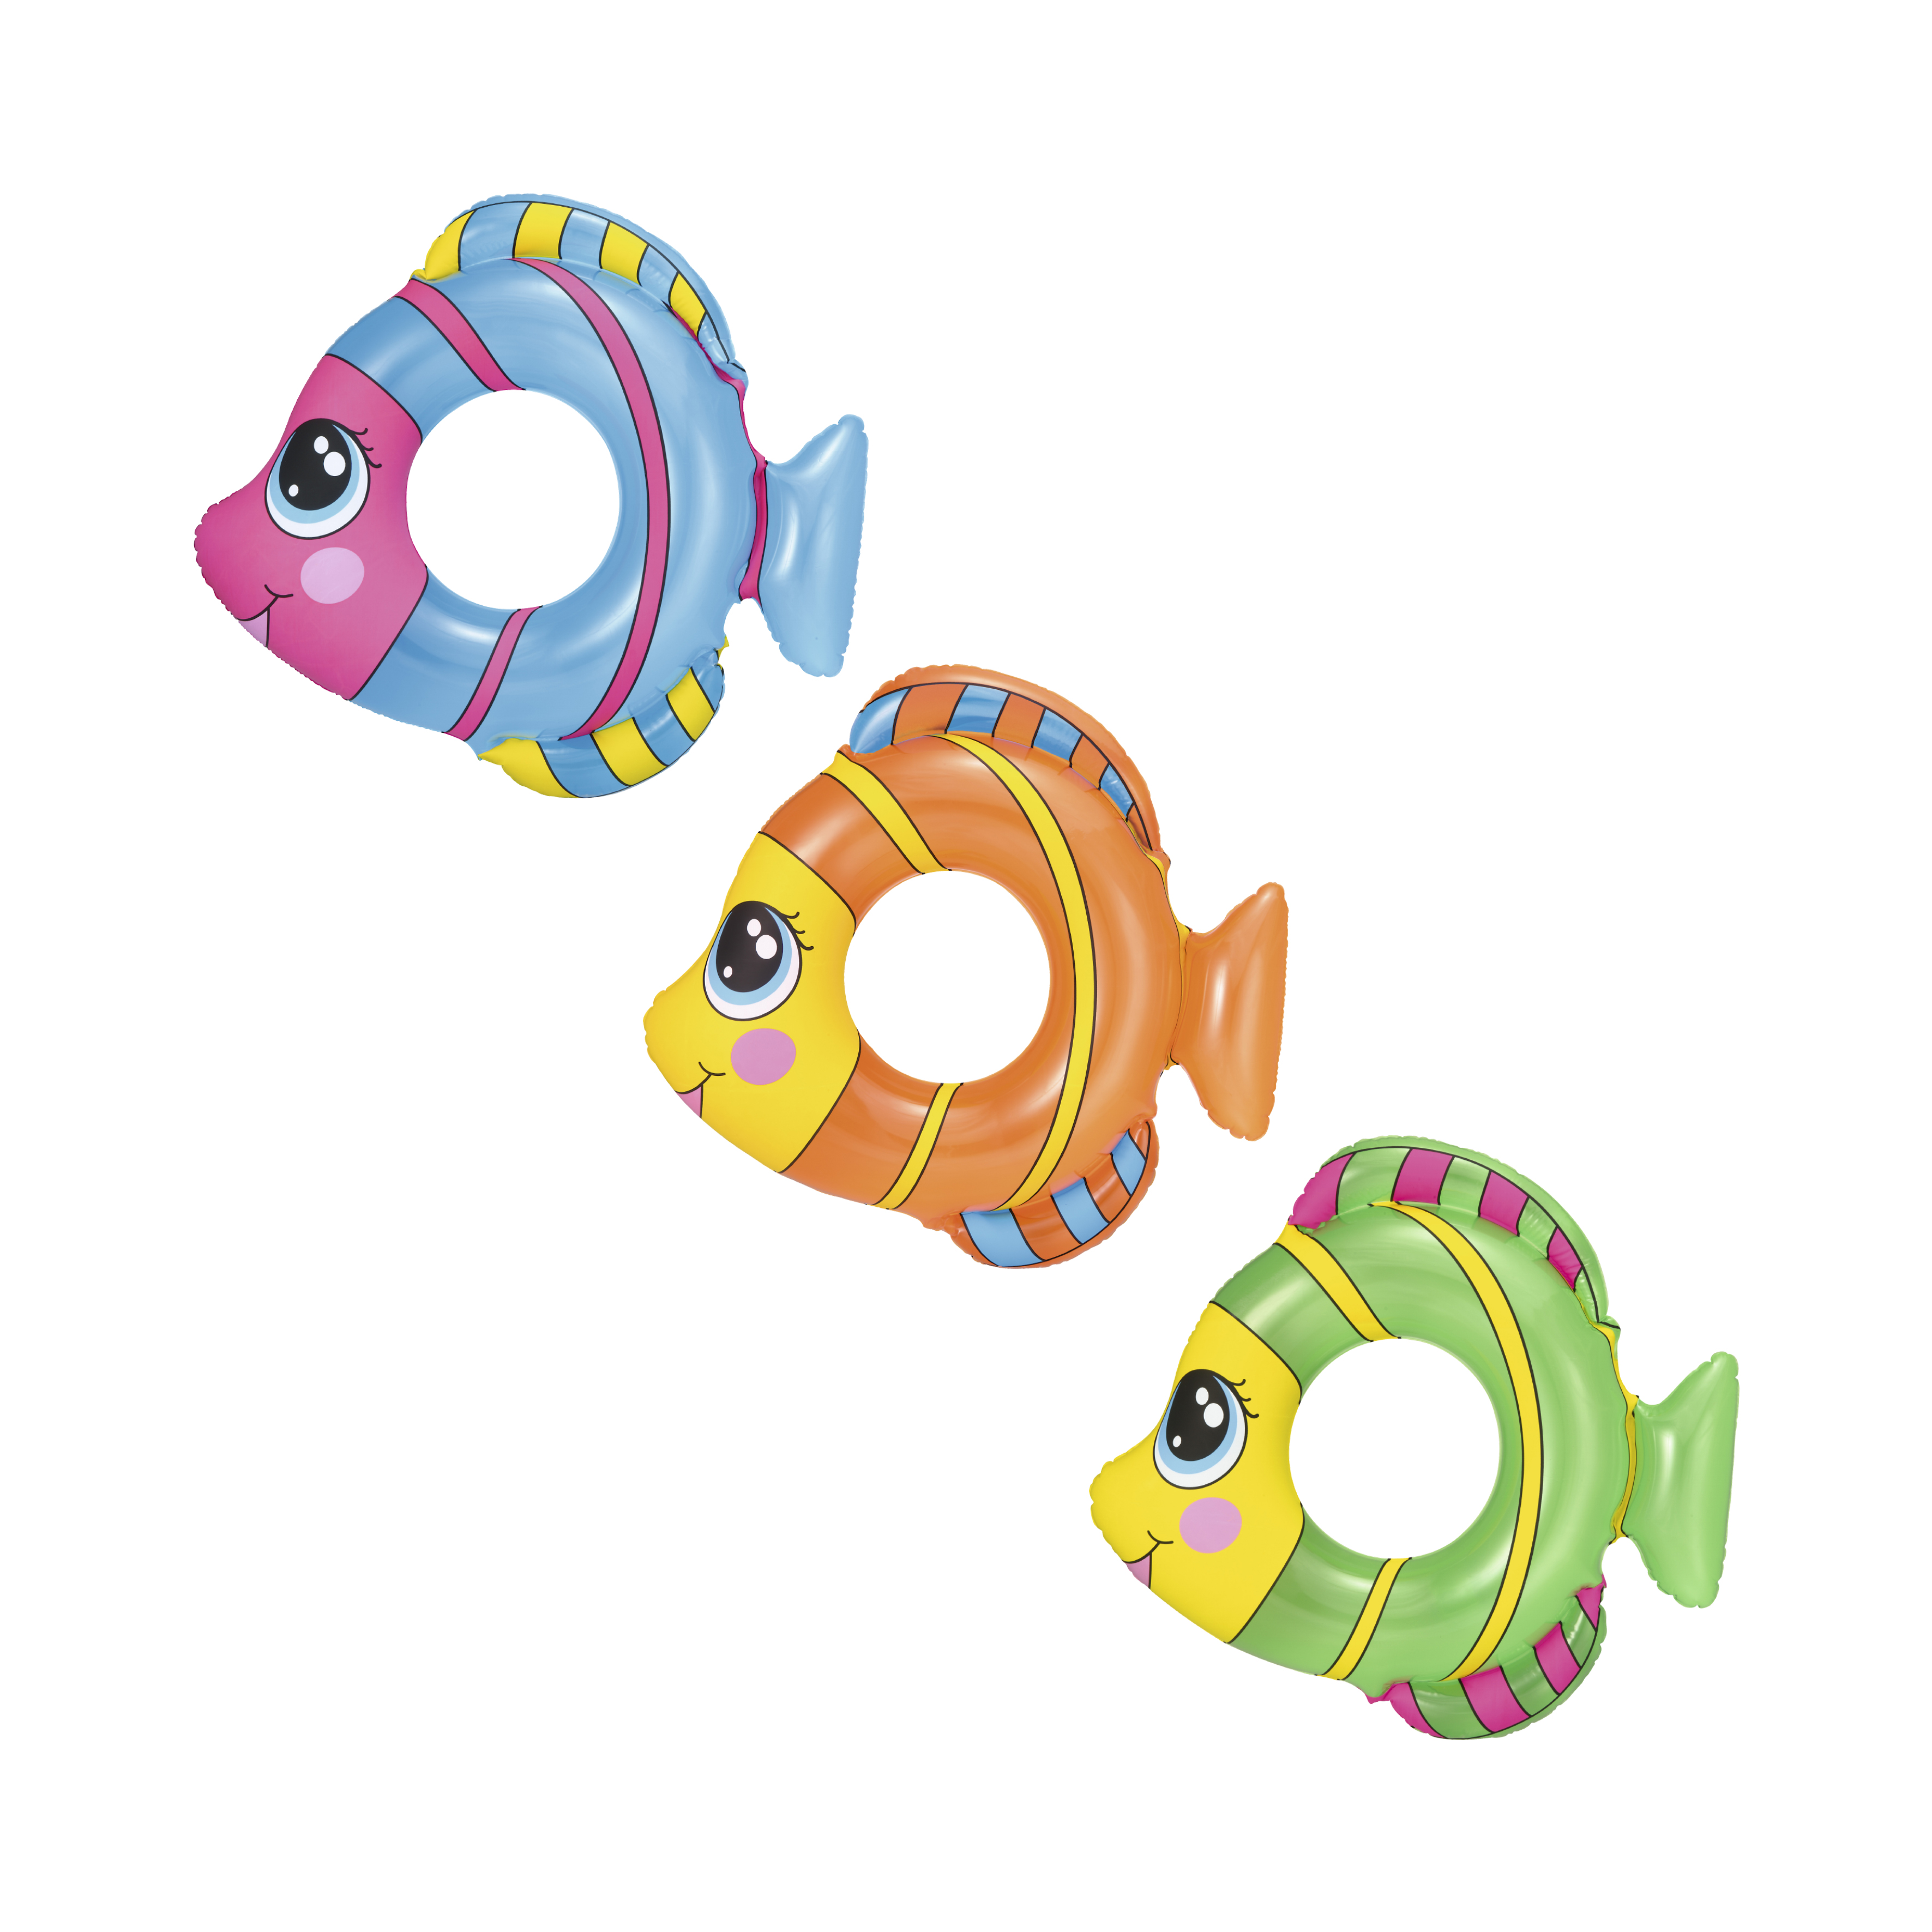 Круг для плавания Bestway Рыбки в трёх расцветках (36111) круг надувной для плавания рыбки 81 76см 36111 bestway